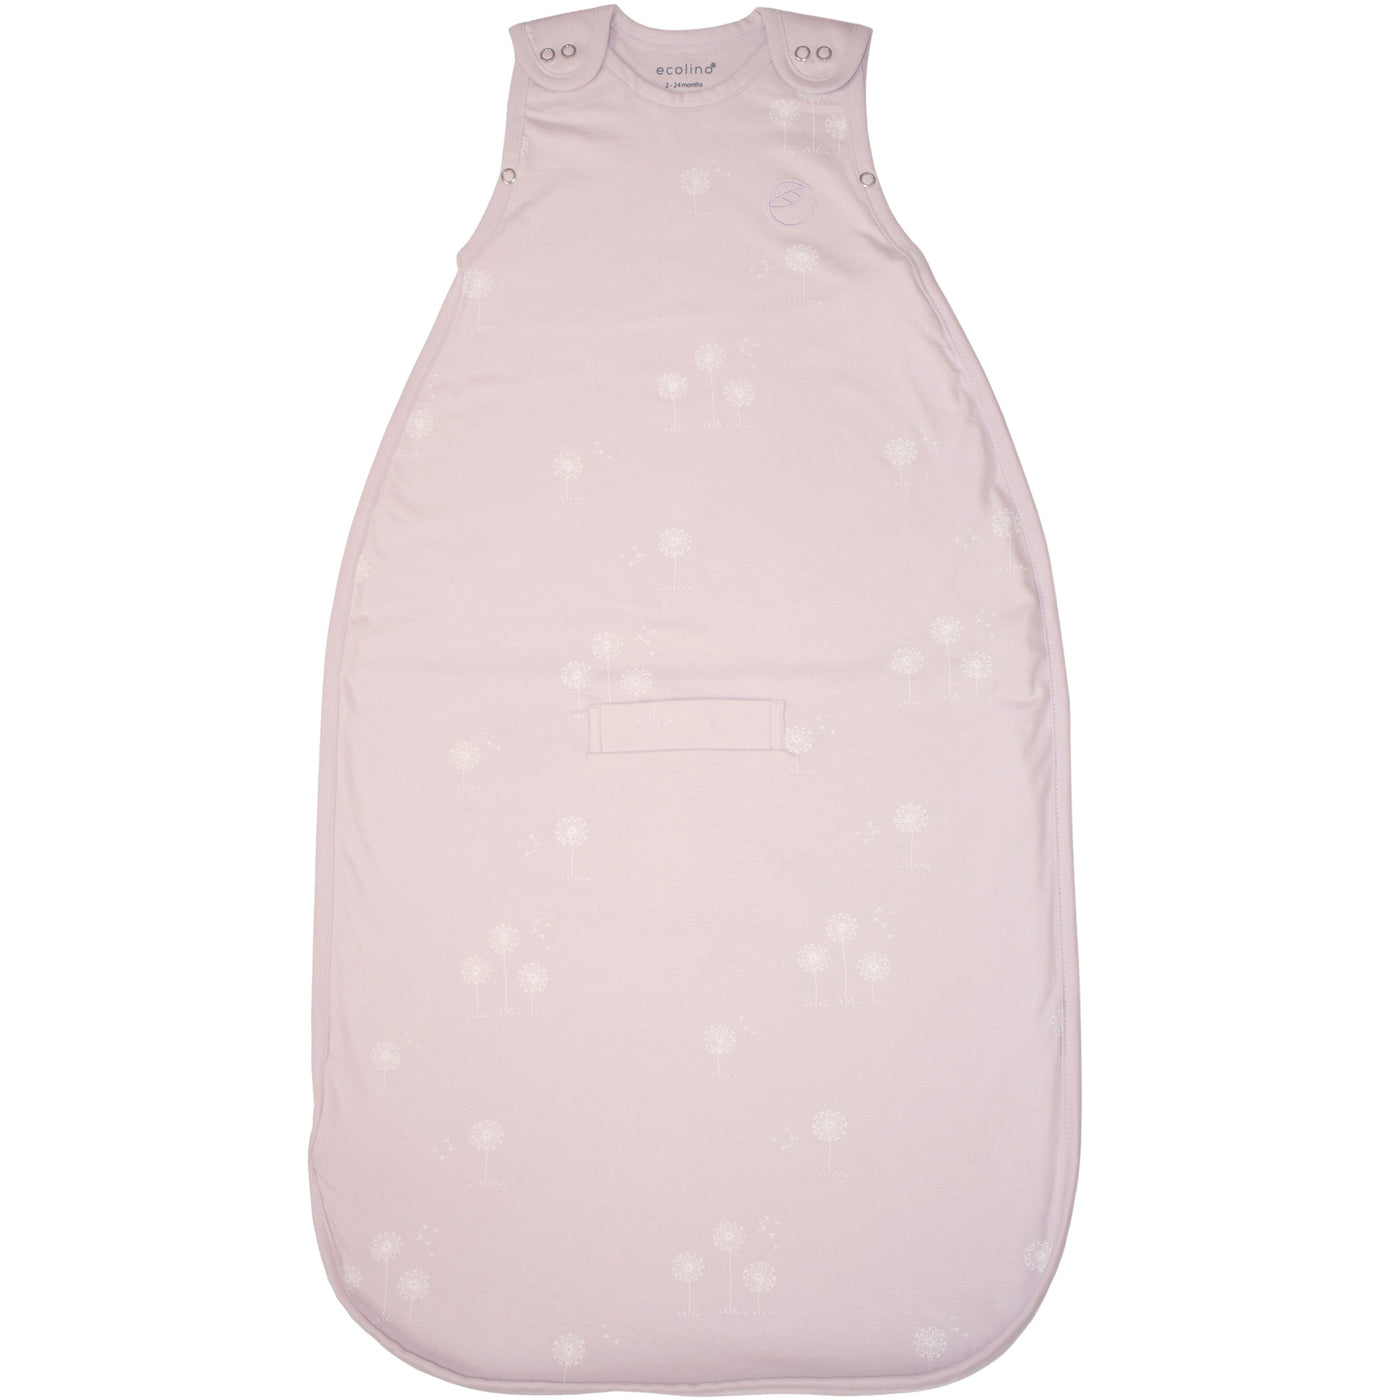 Imperfect Ecolino Adjustable Baby Sleep Bag, 100% Organic Cotton, Universal Size: 2 Months - 2 Years, Dandelion